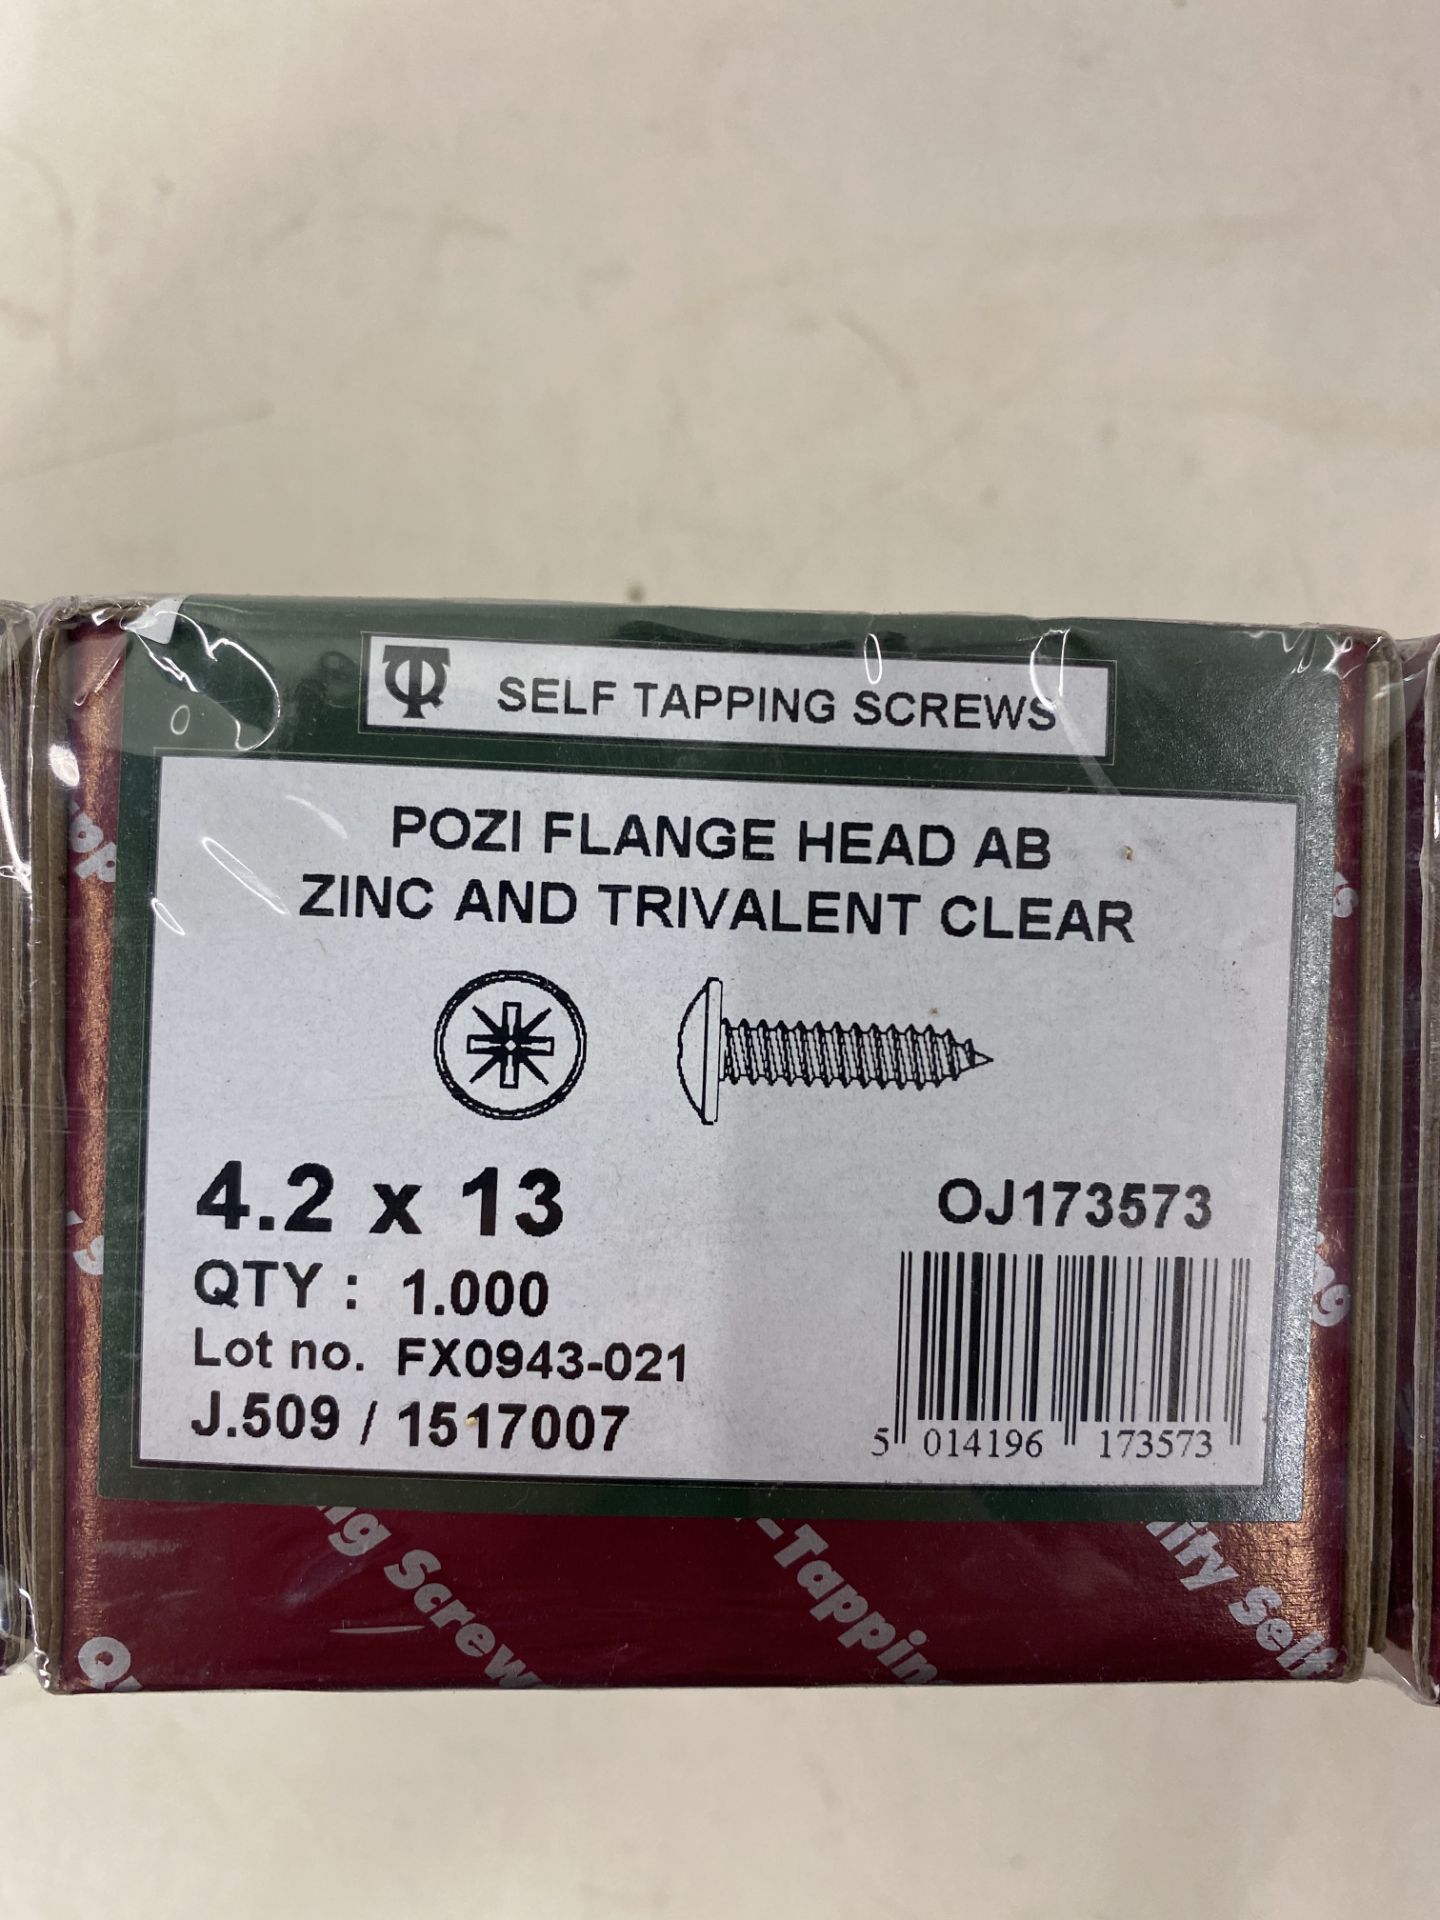 9 x Self Tapping Screws Pozi Flonge Head Zinc And Trivalent Screws ( 1000 pcs Per Box ) - Image 3 of 3